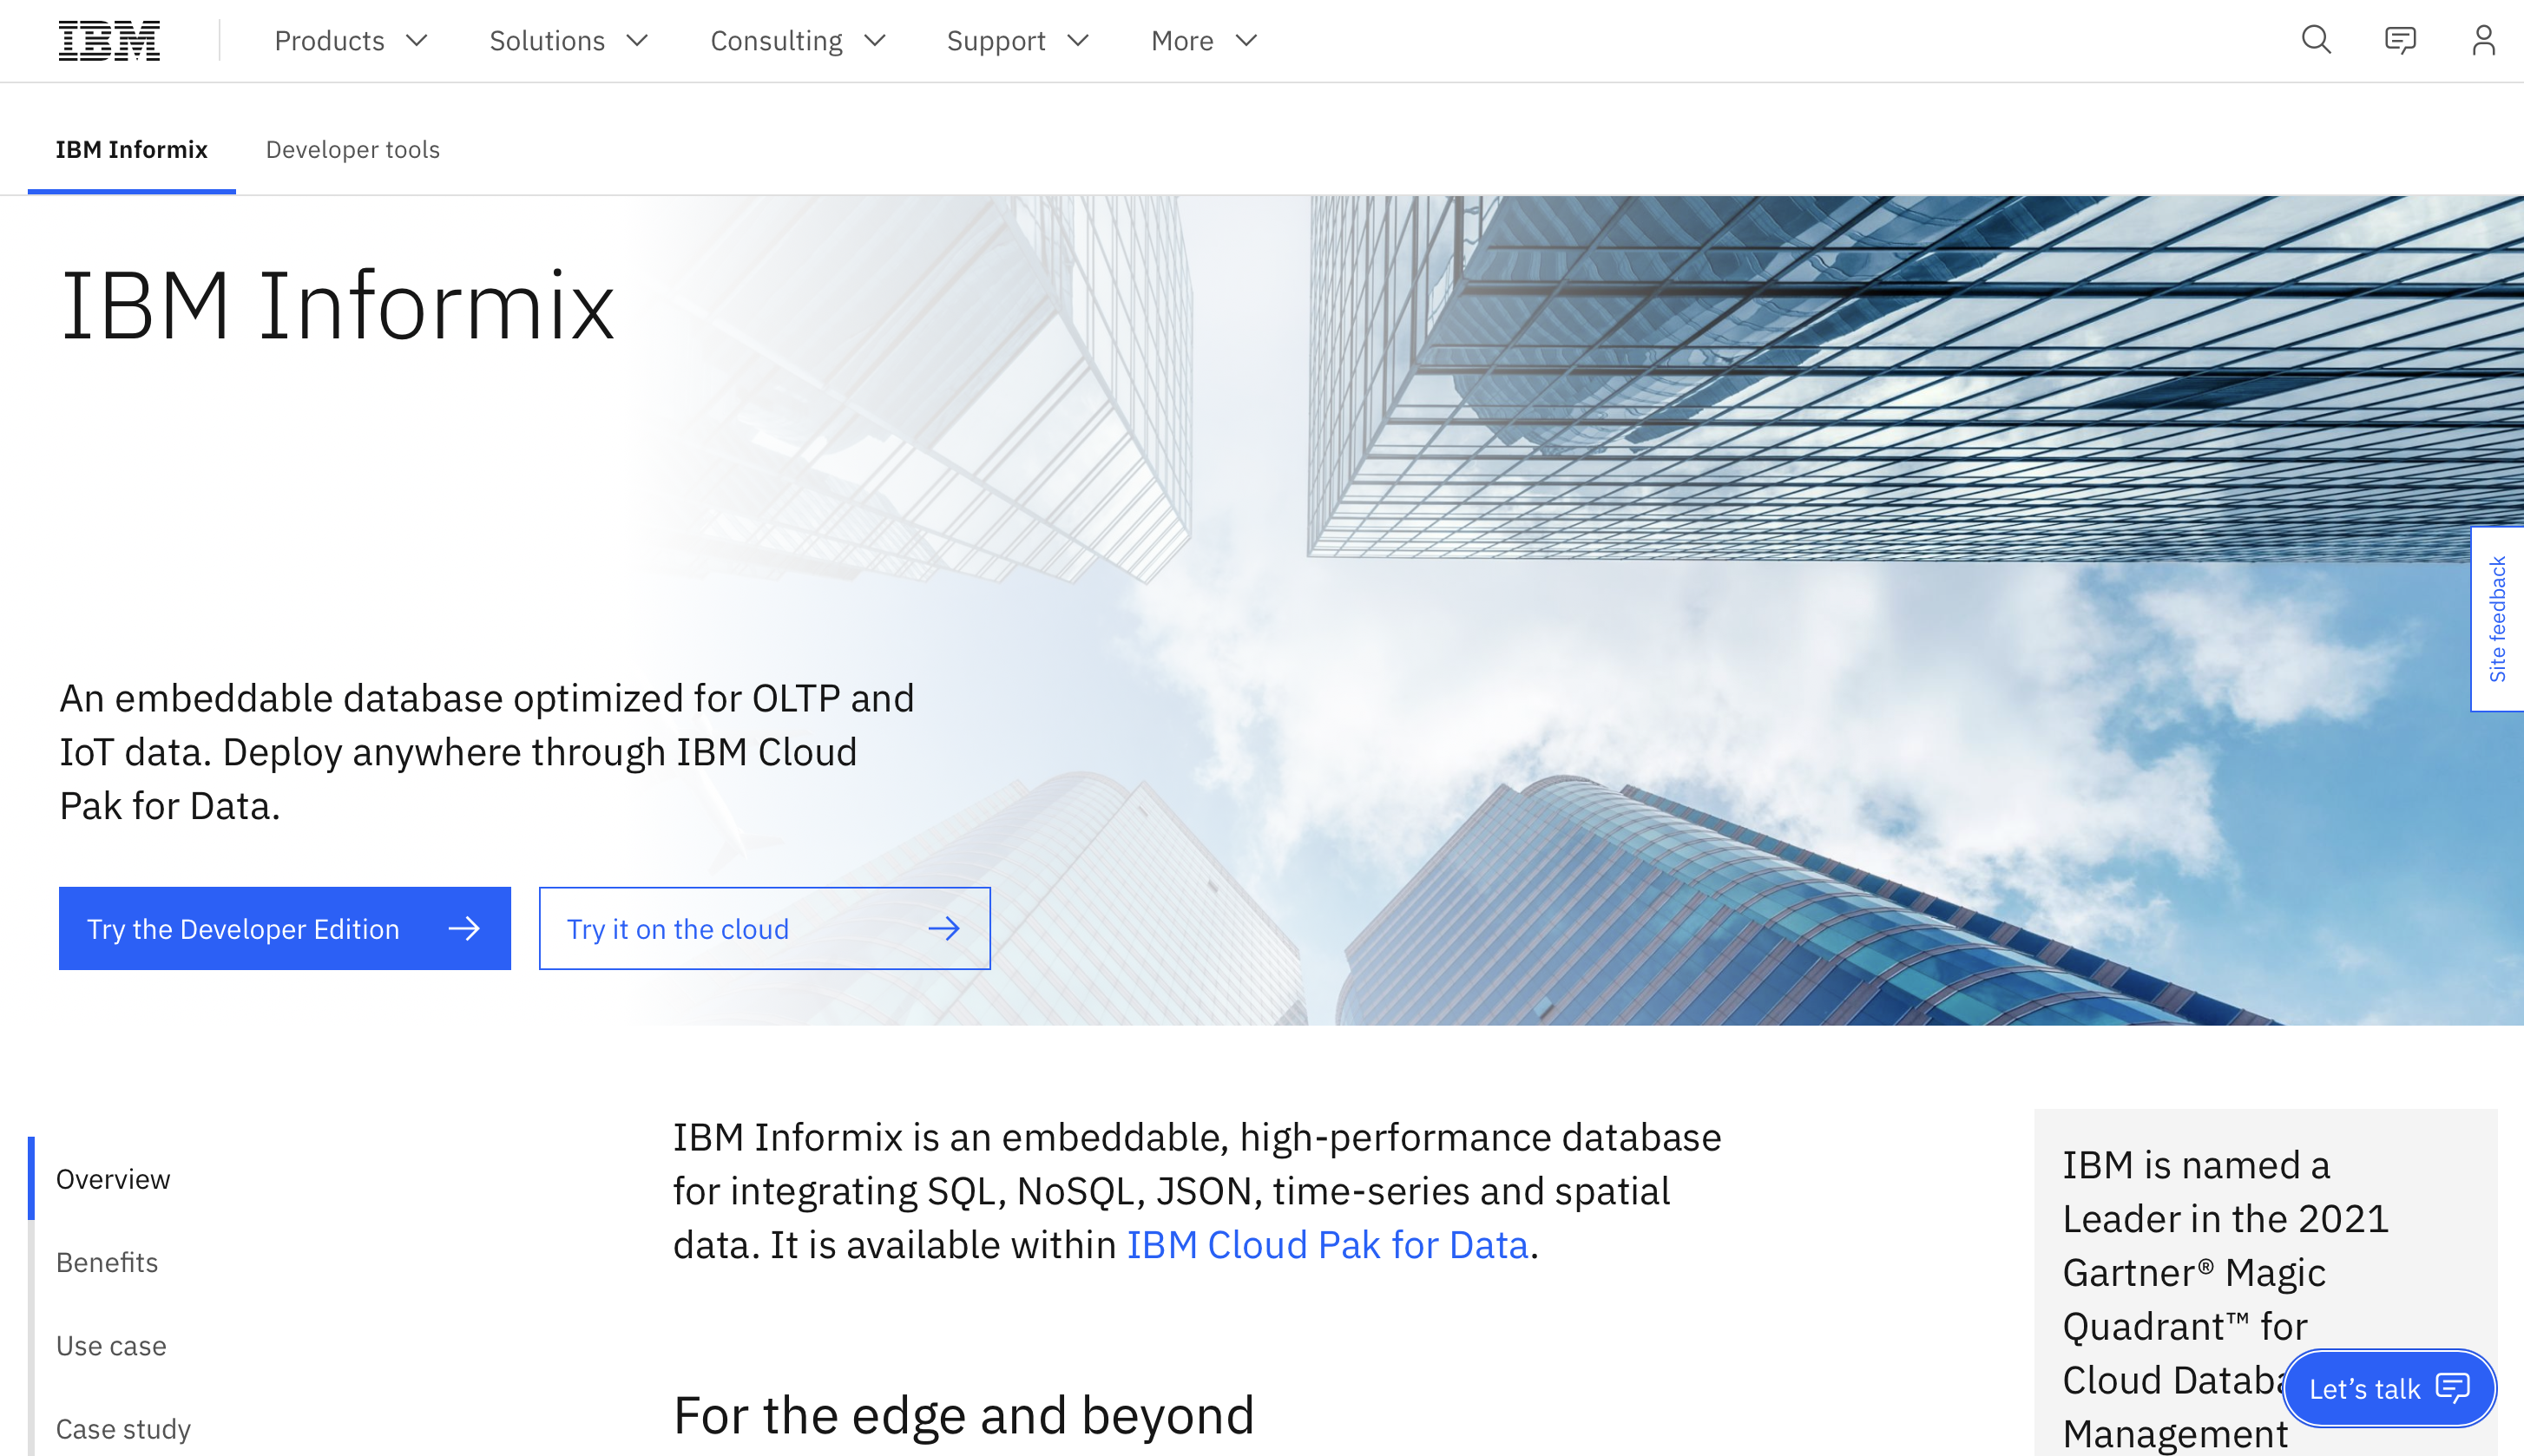 I-IBM Informix